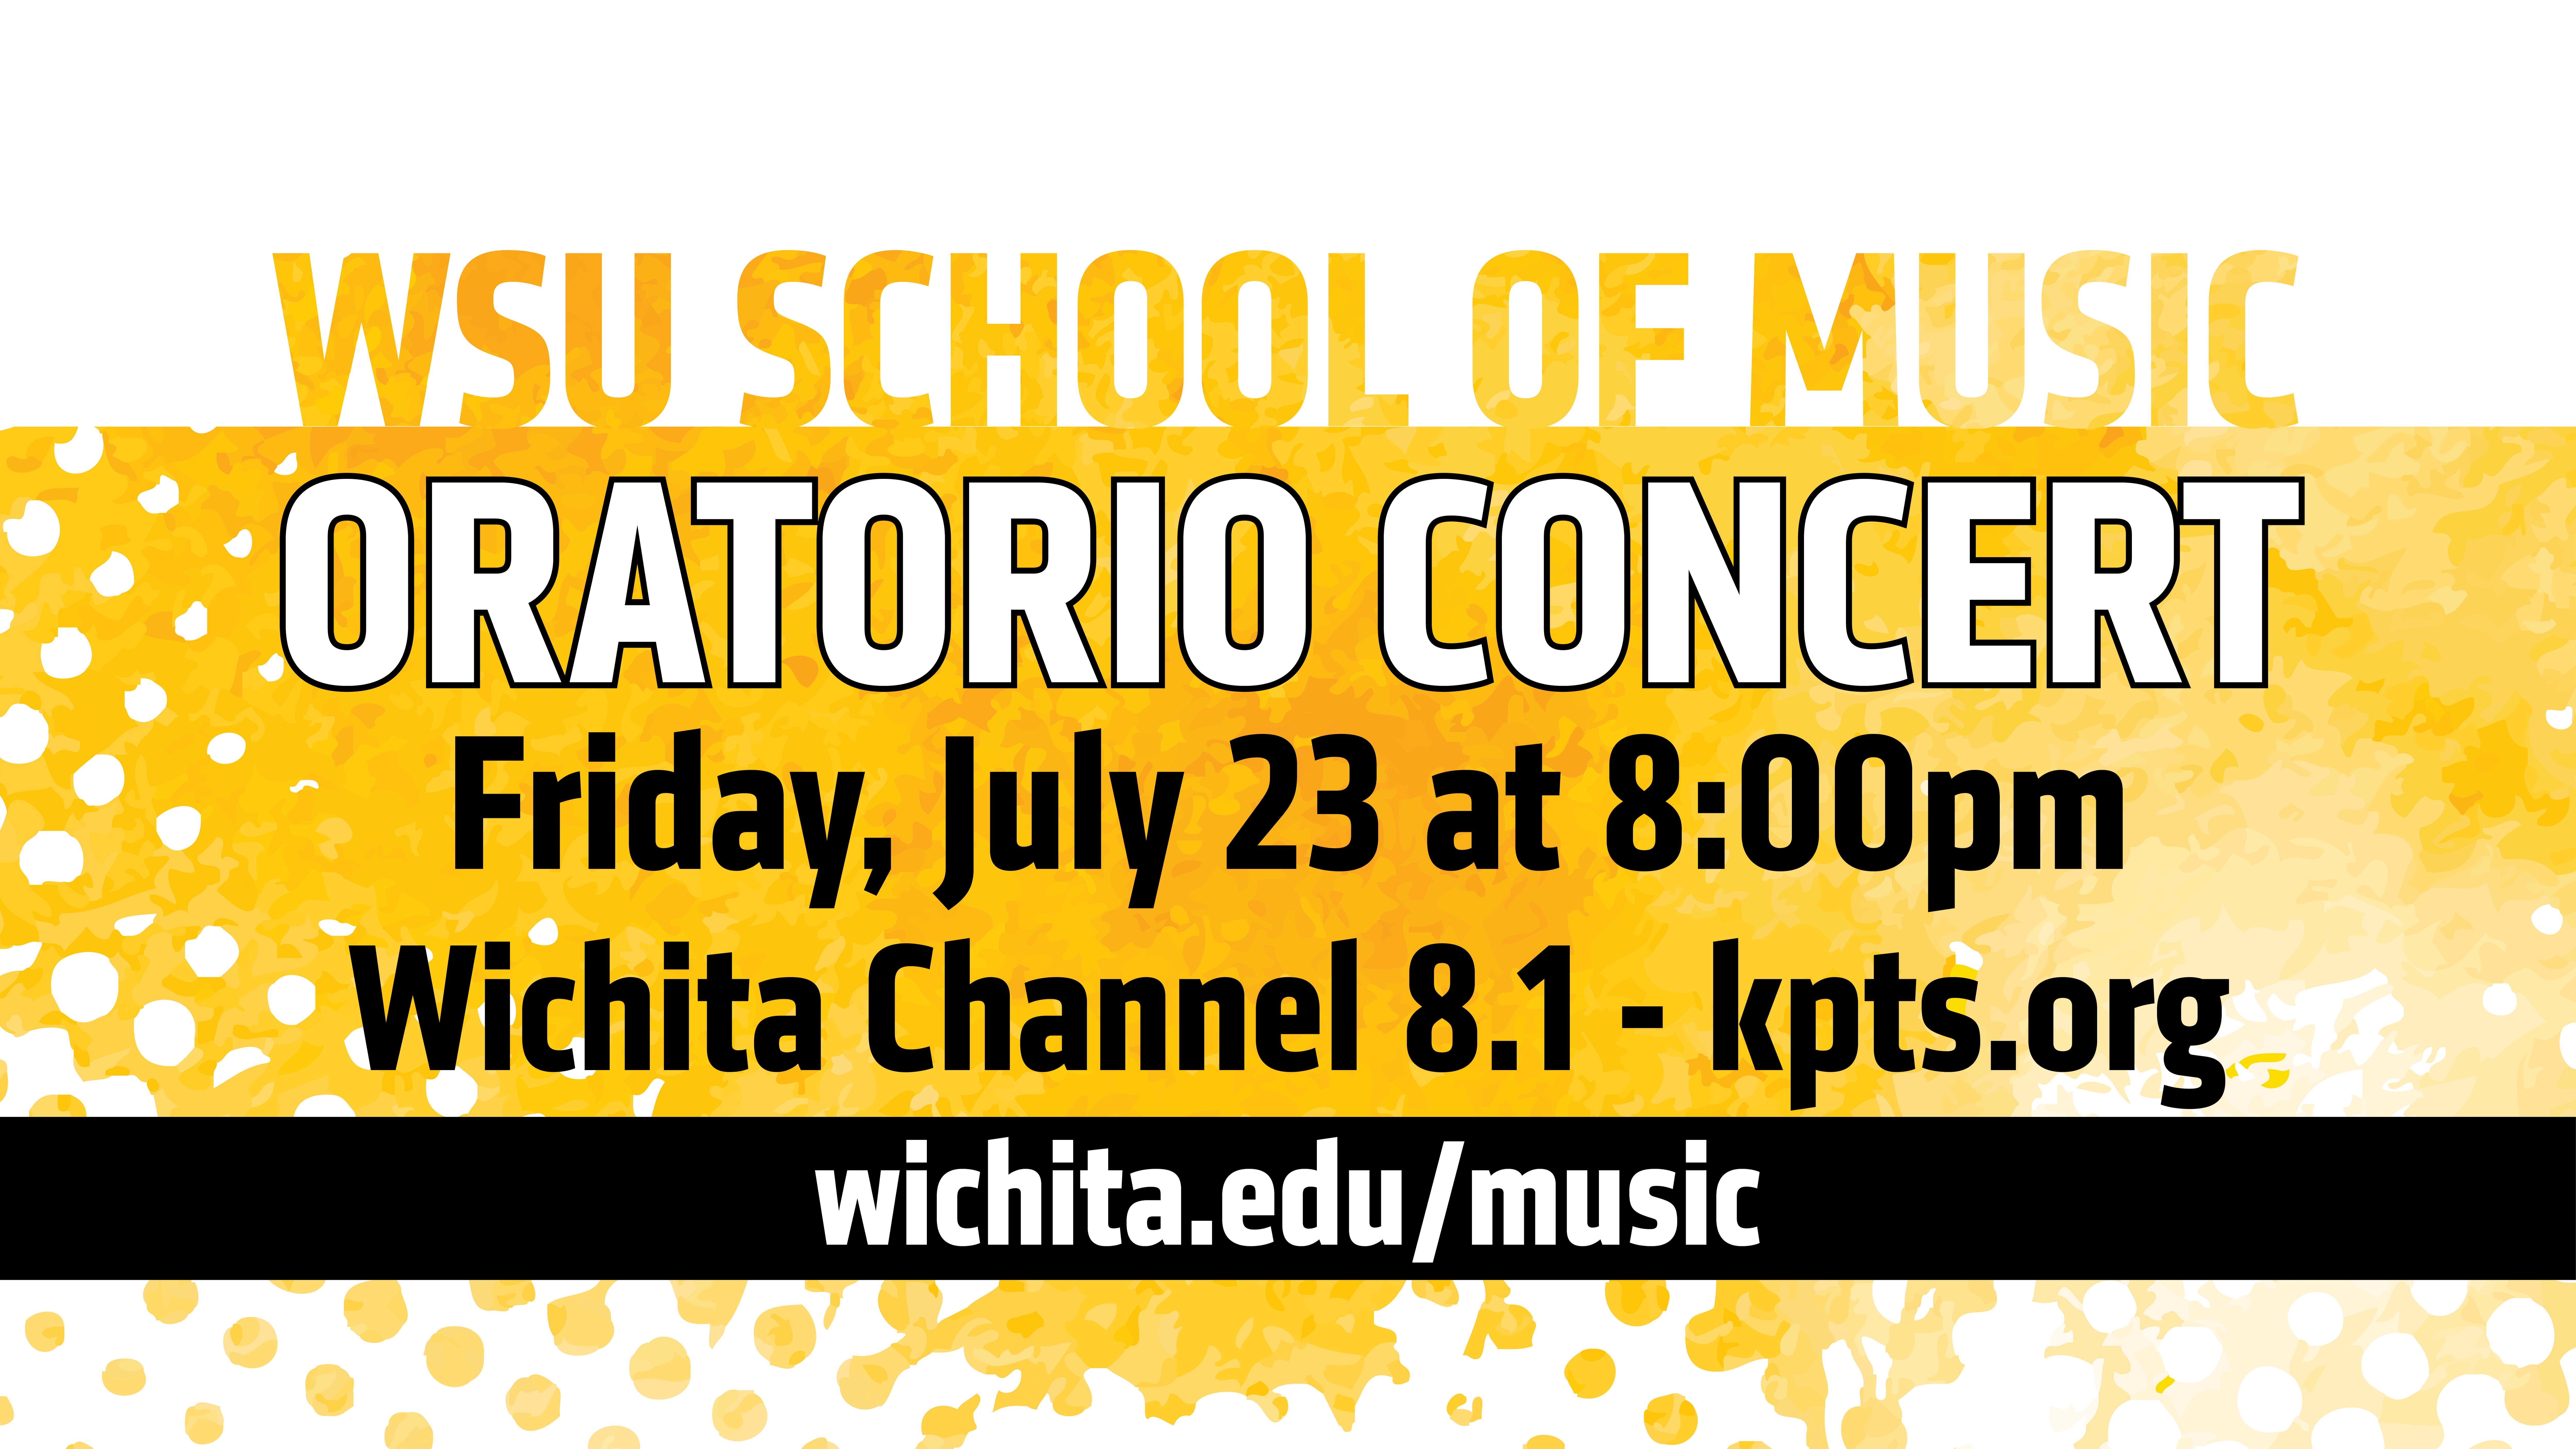 Wichita State School of Music, Oratorio Concert, Friday, July 23 at 8:00pm, Wichita Channel 8.1 - kpts.org, wichita.edu/music